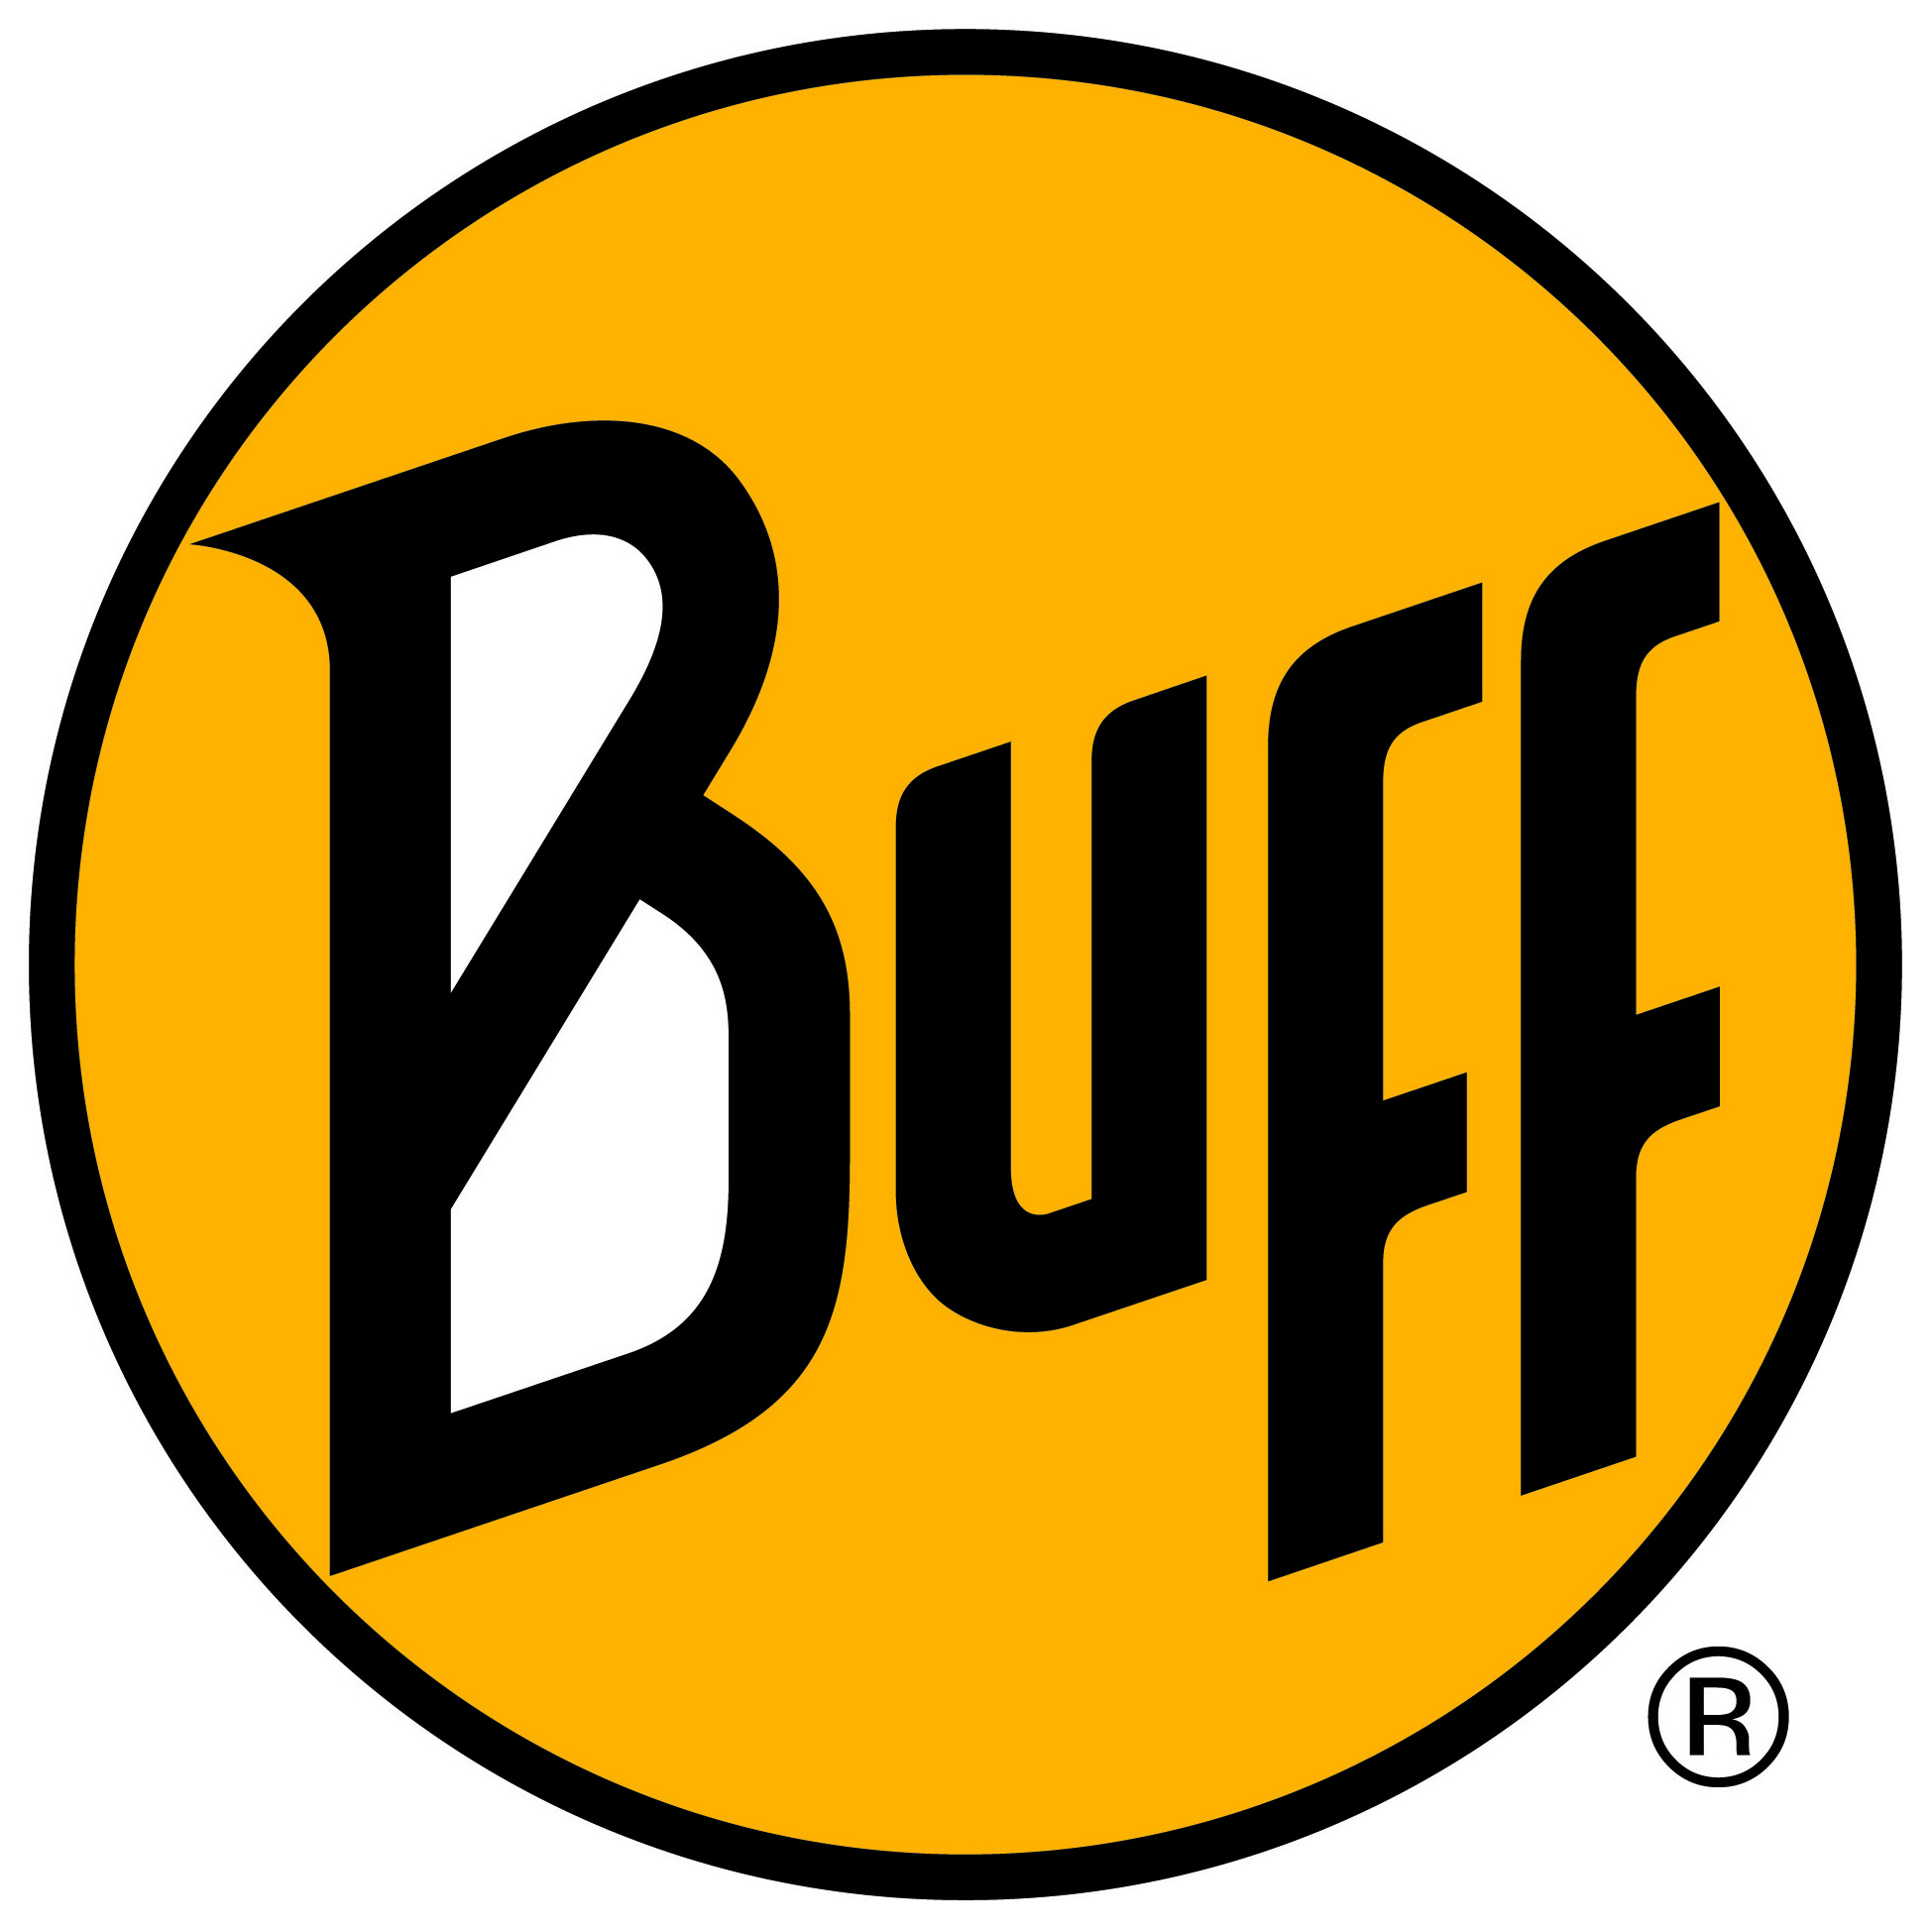 BUFF¬ logo for Sports line CMYK.jpg